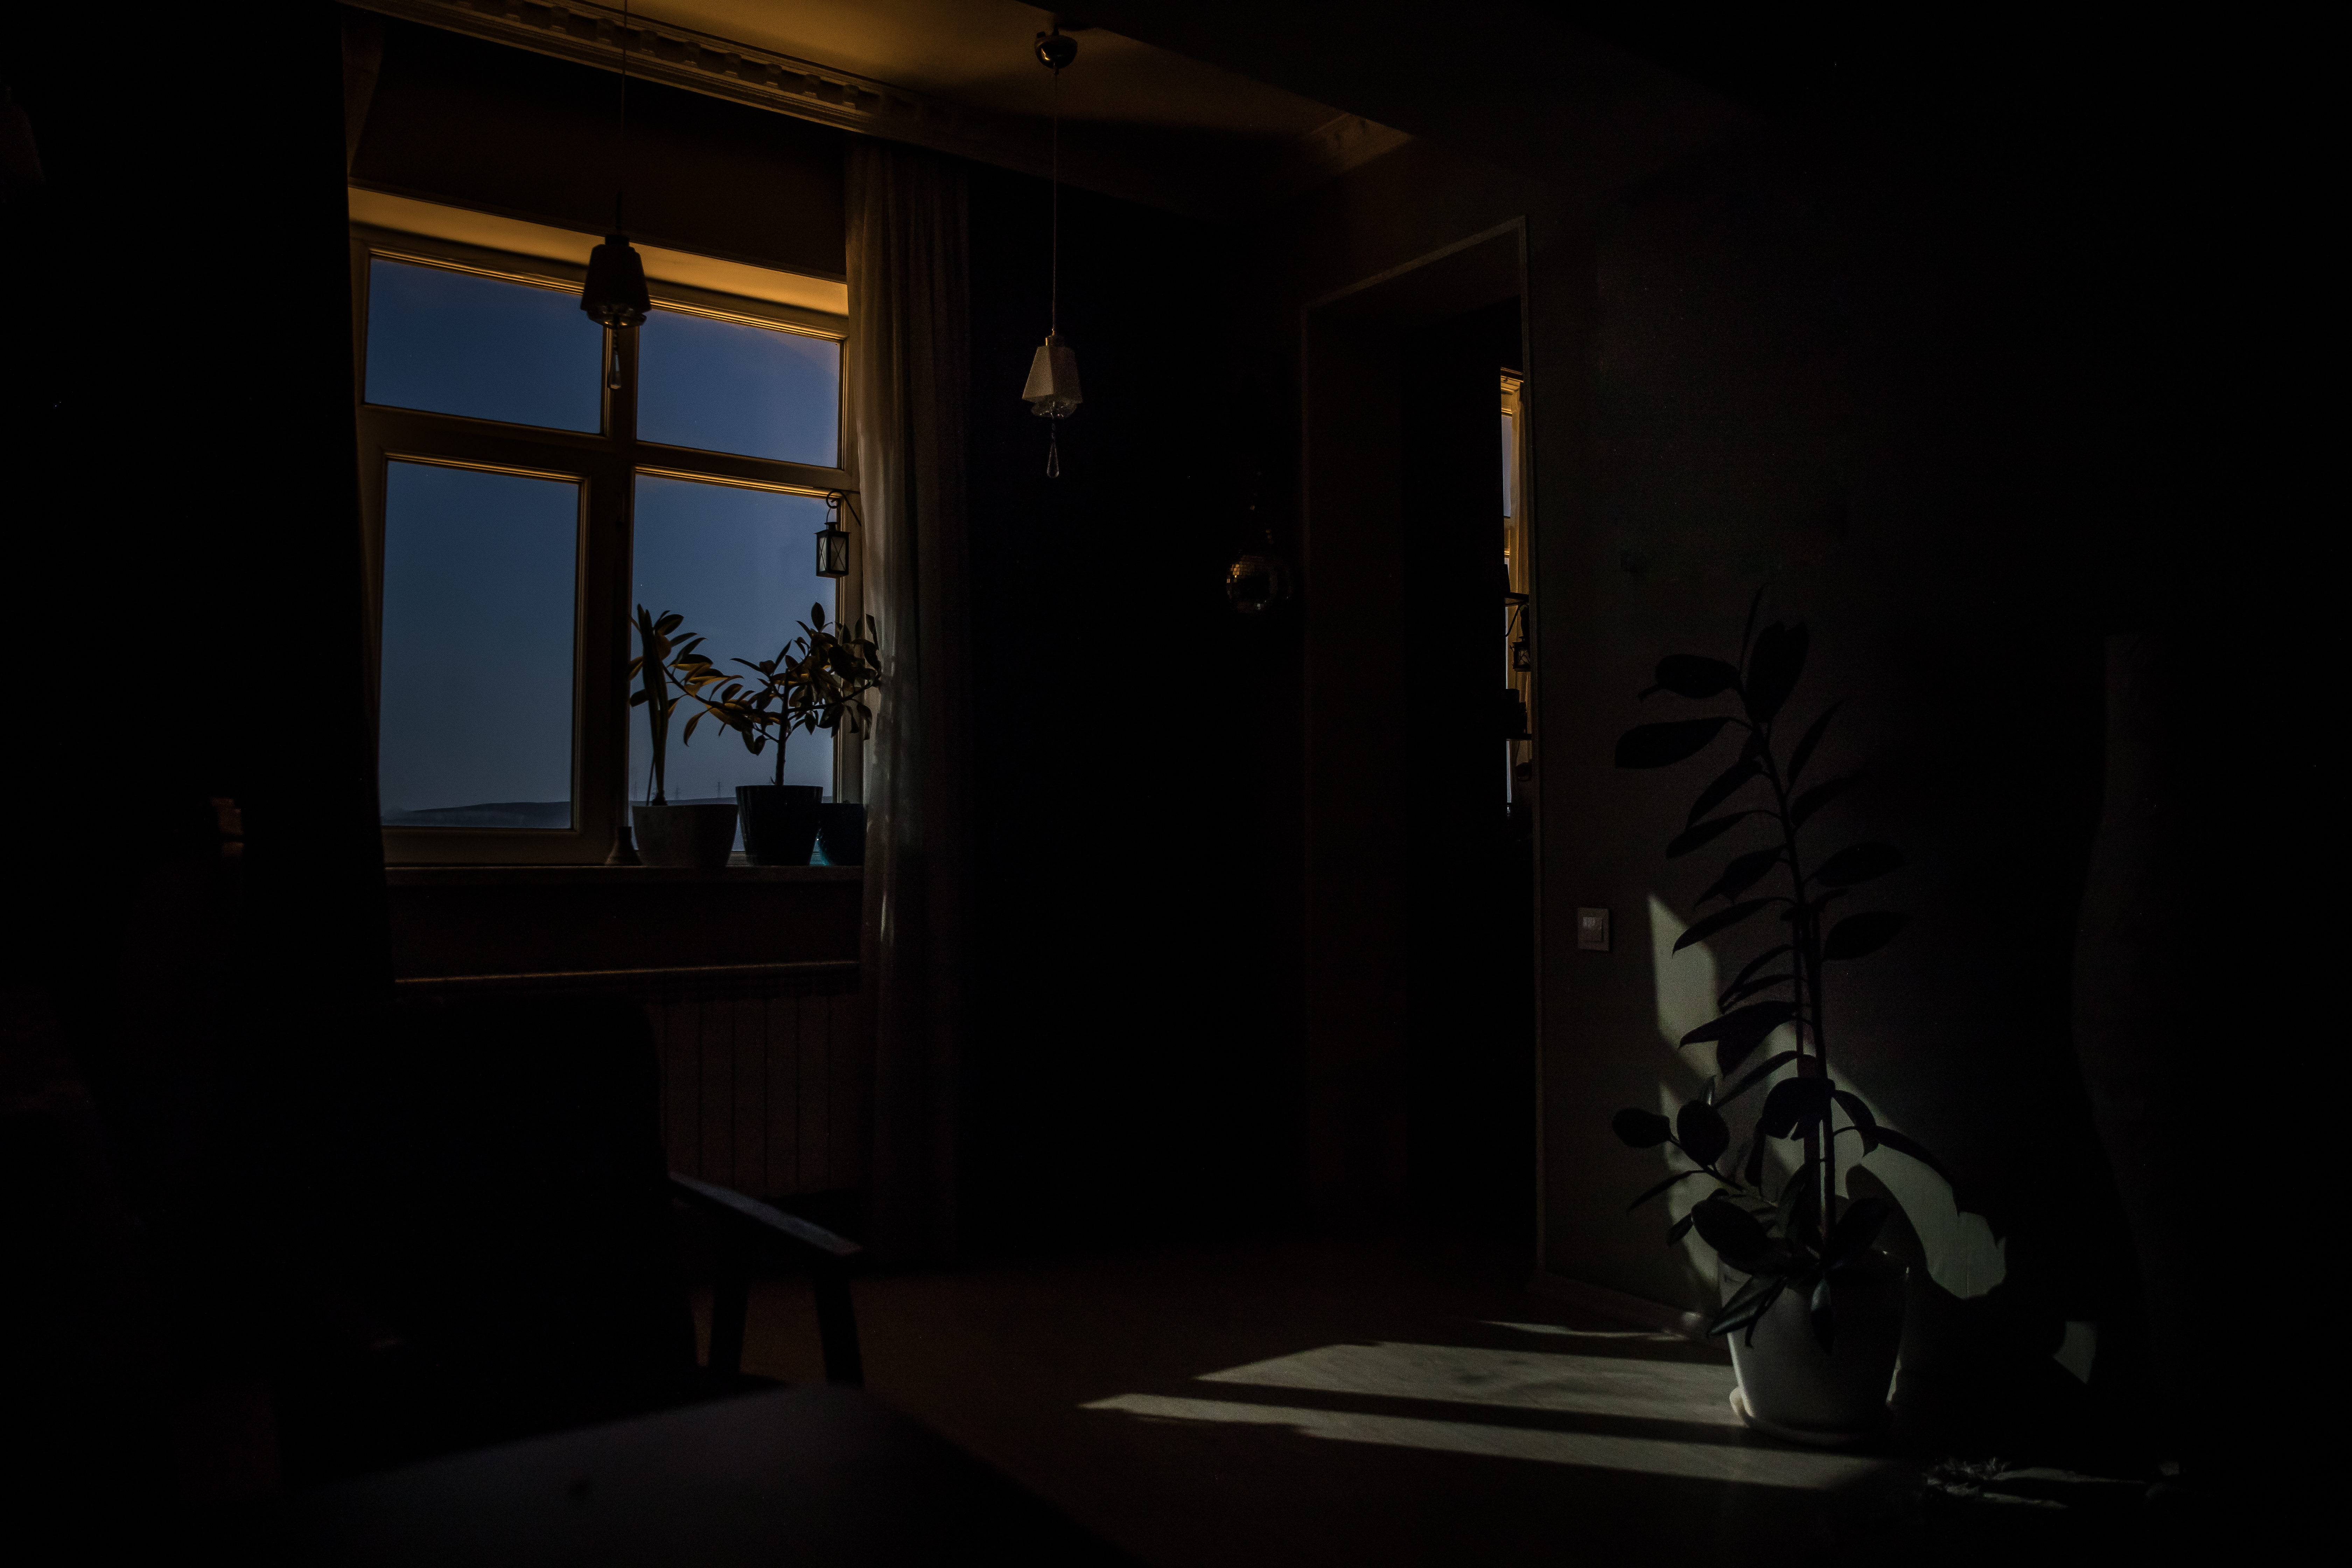 Night scene of moon seen through the window from dark room | Source: Shutterstock.com